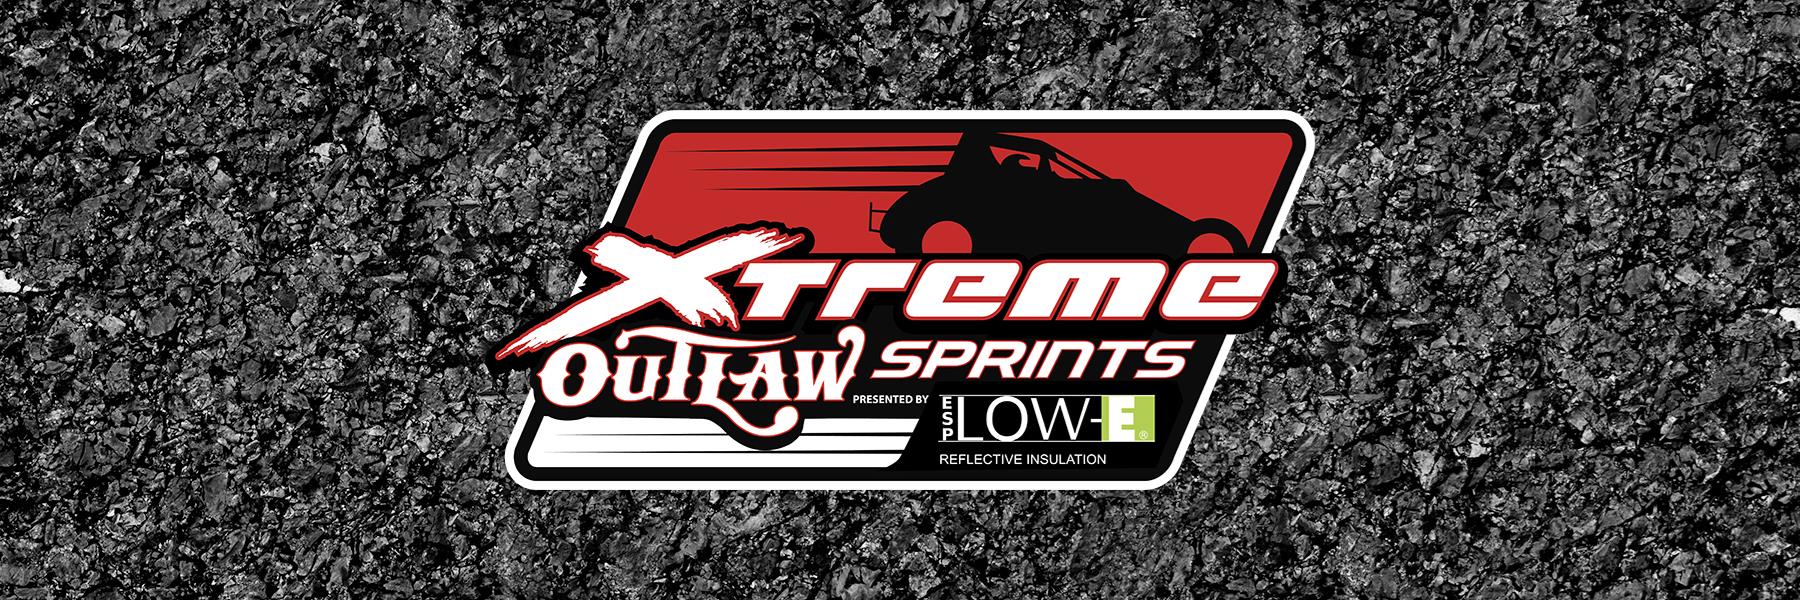 Xtreme Outlaw Sprints